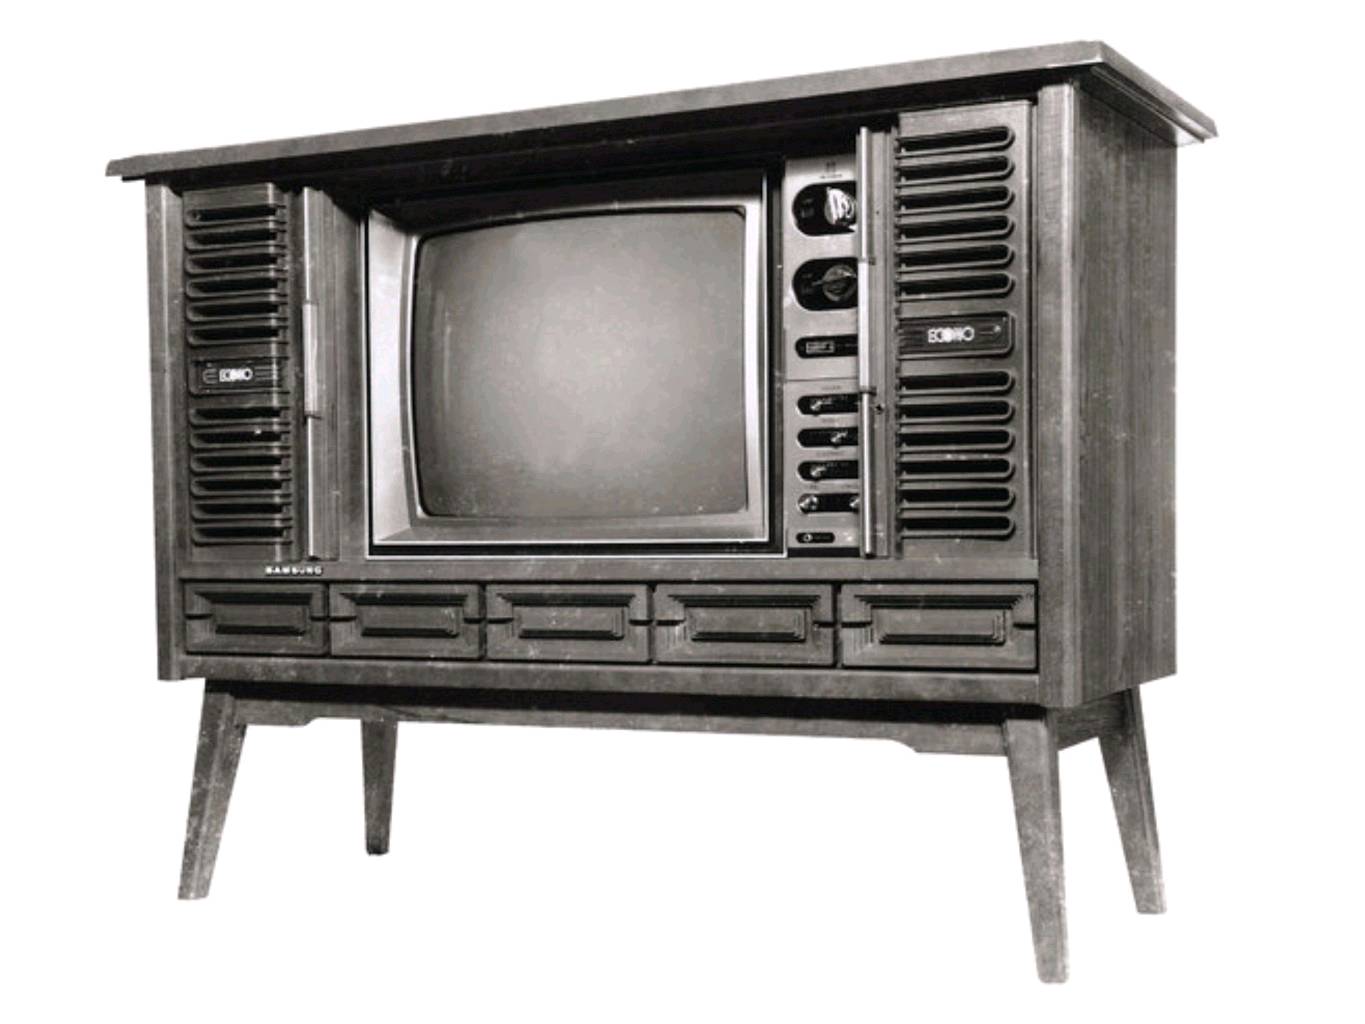 Телевизор на 1 час. Телевизор Samsung 1980. Первый телевизор самсунг 1970. Первый телевизор самсунг 1960. Черно белый телевизор.